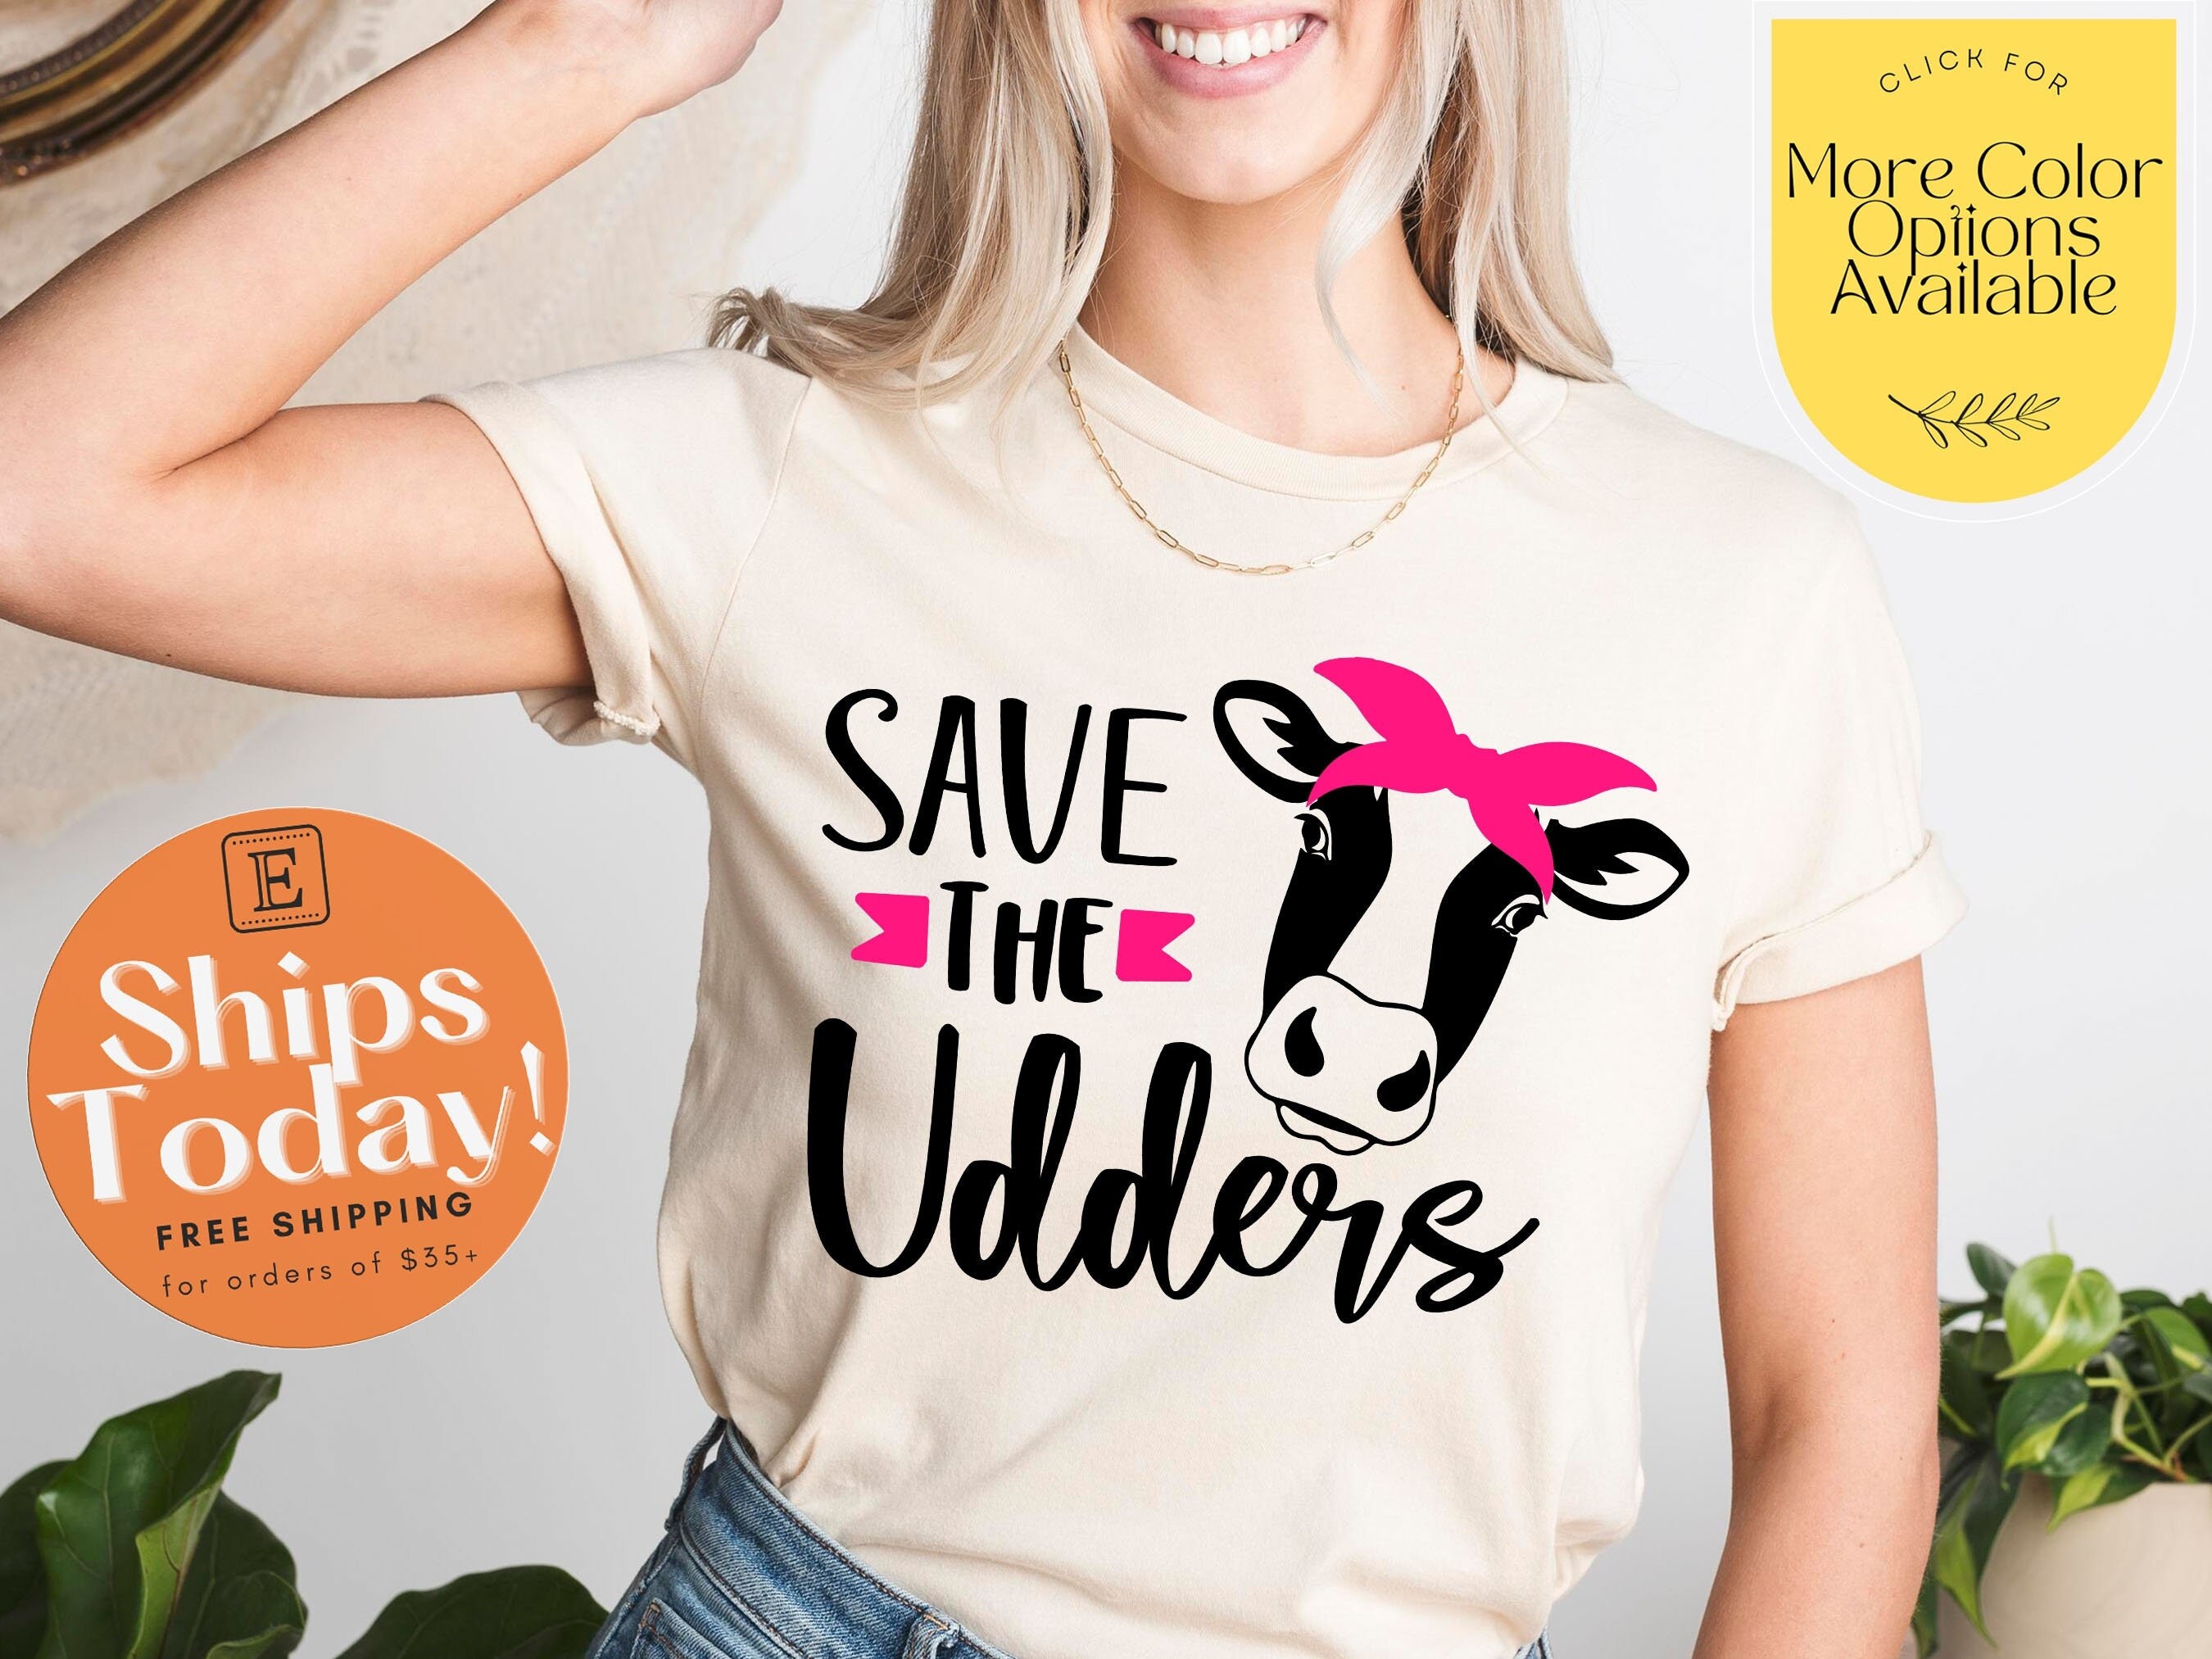 Save the Udders Shirt Breast Cancer Awareness Shirt Cancer